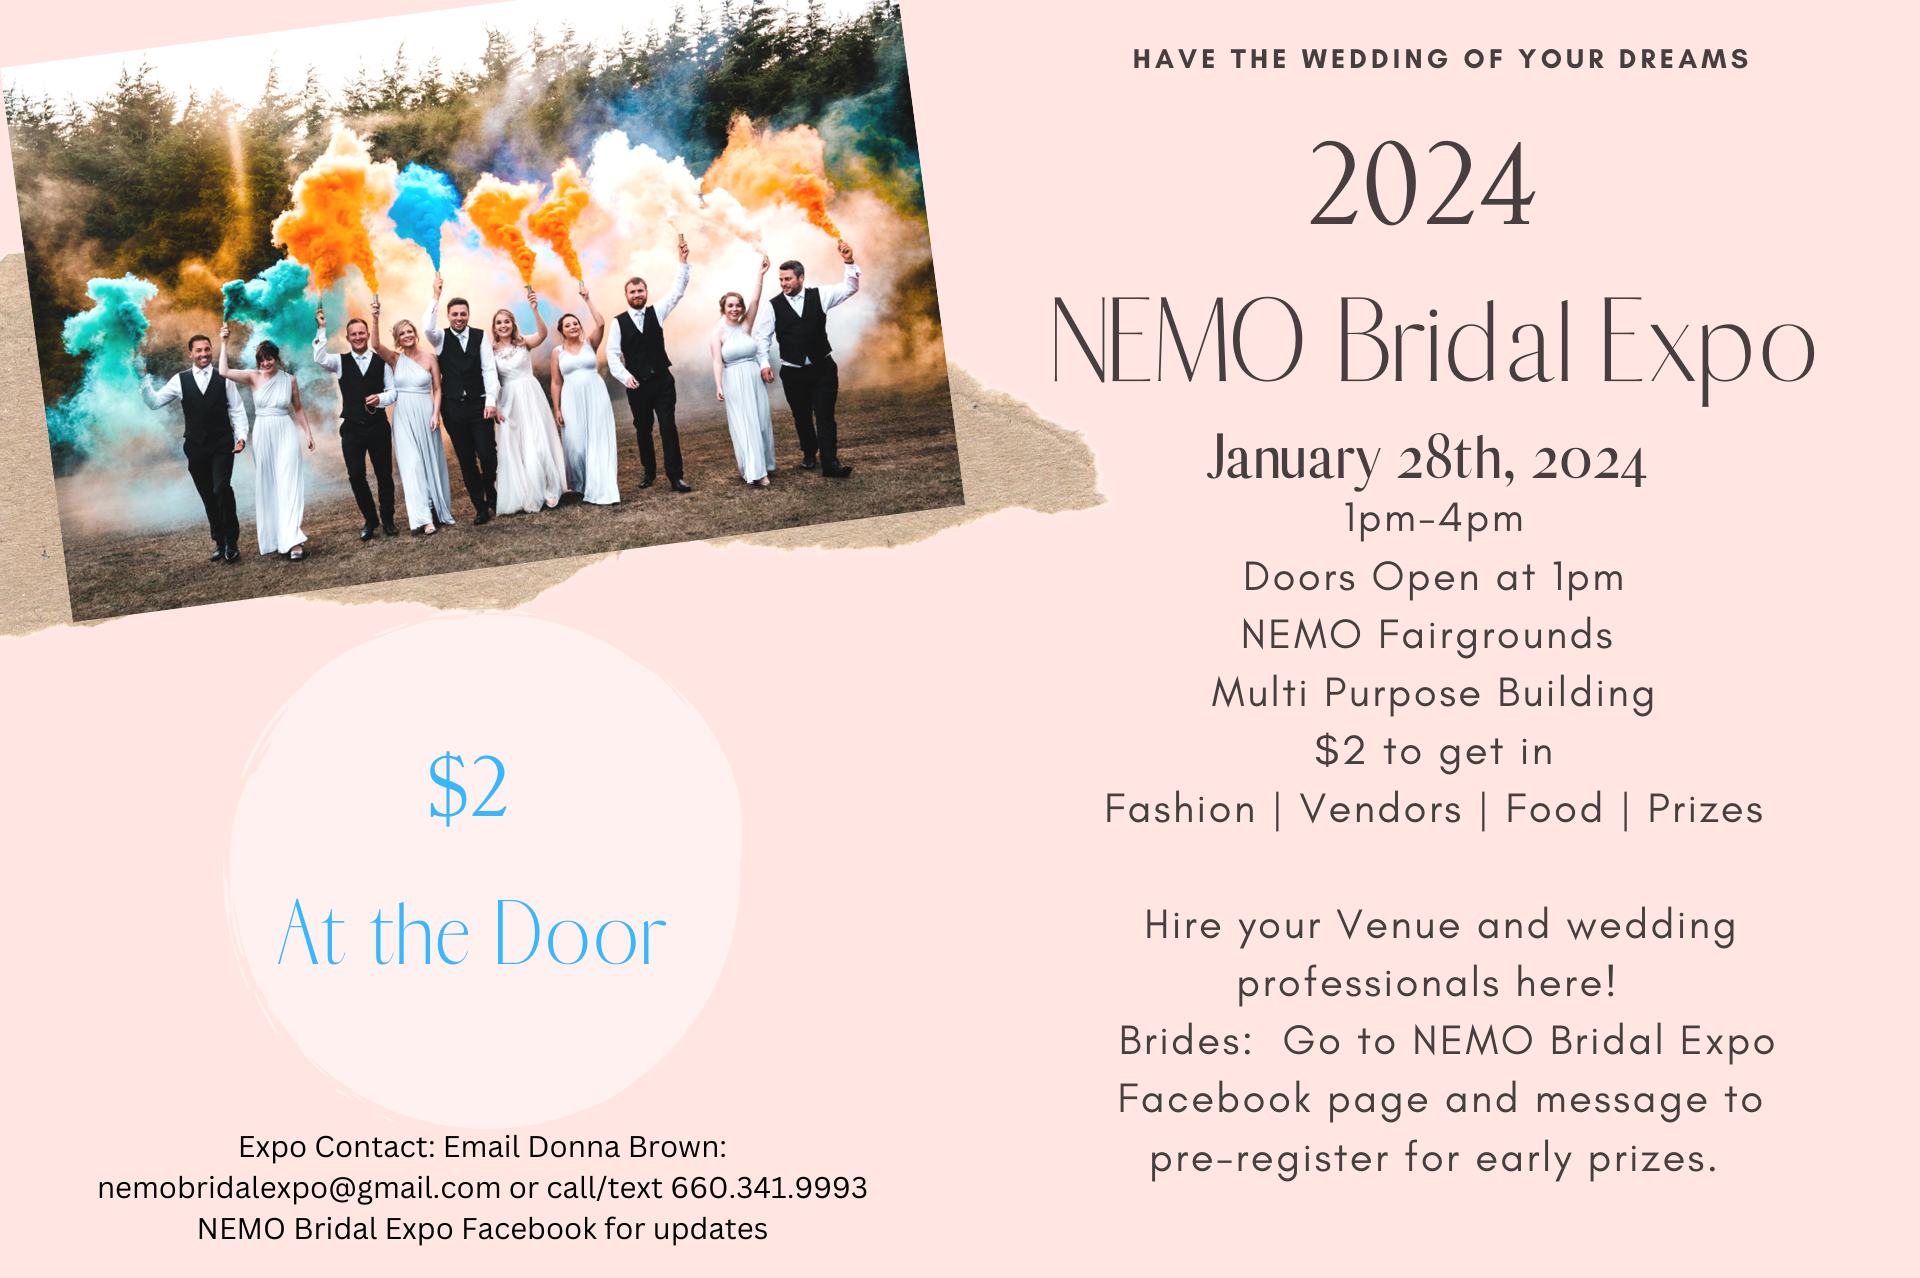 Check more about NEMO Bridal Expo